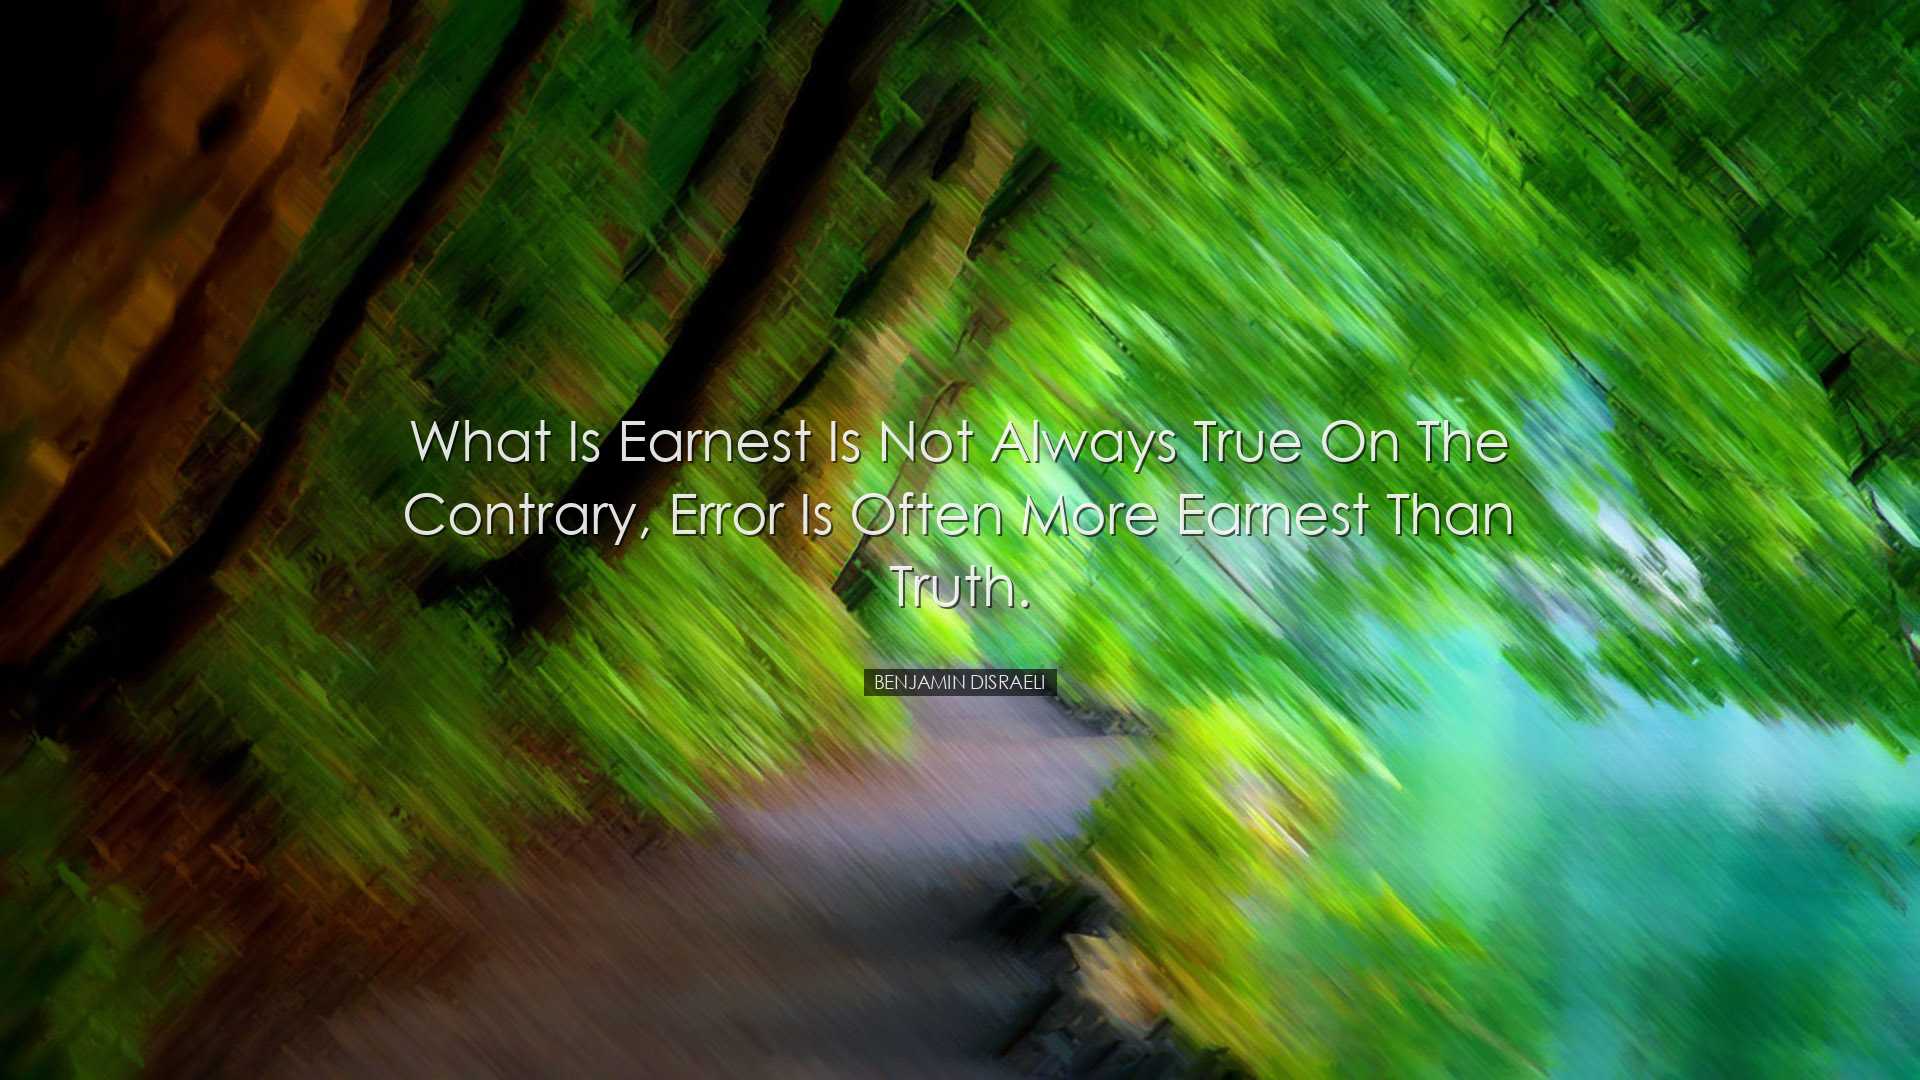 What is earnest is not always true on the contrary, error is often